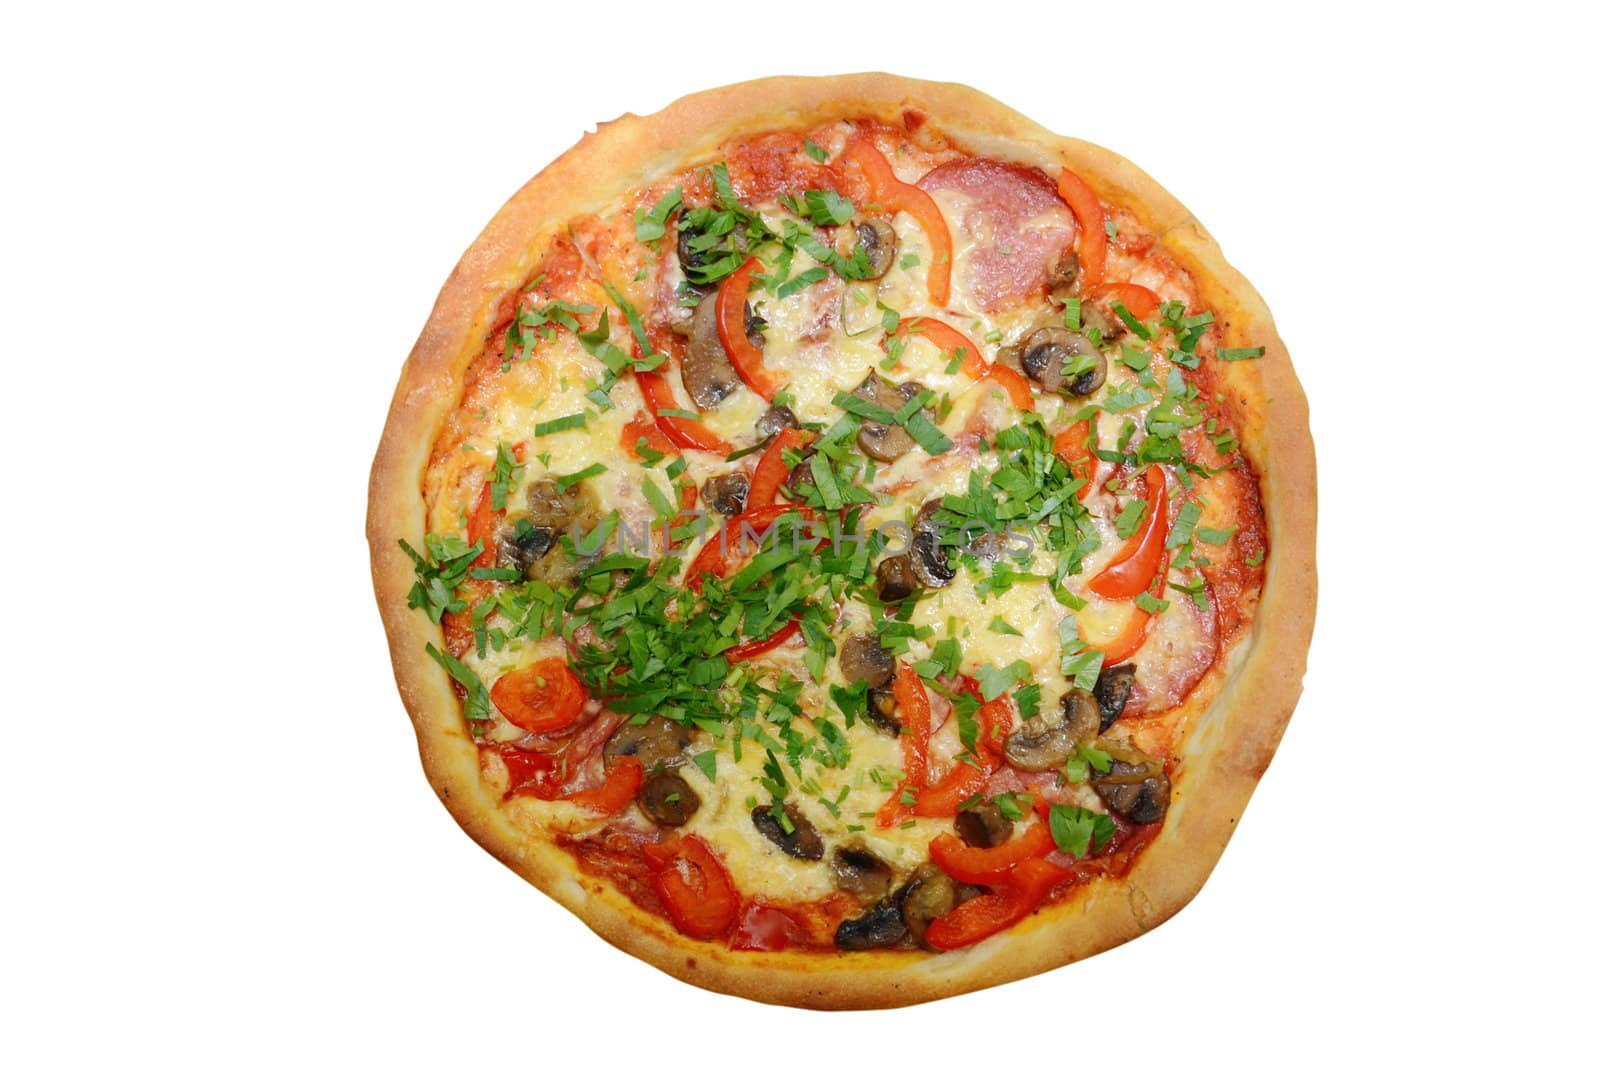 Italian Pizza isolated on white background